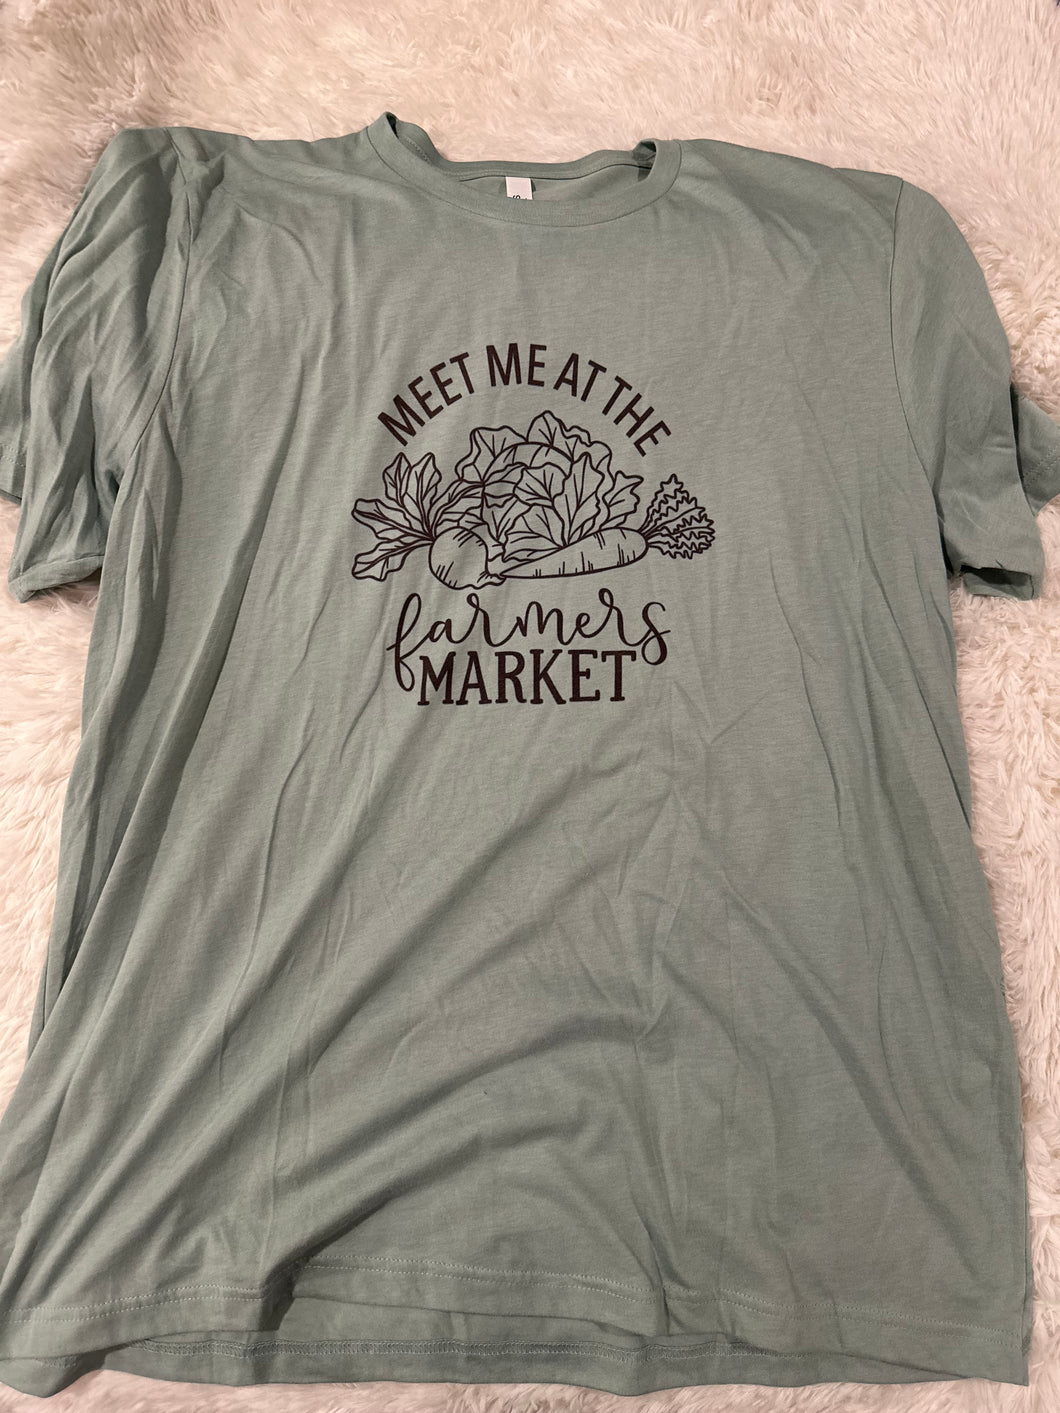 Meet Me At The Farmers Market T-Shirt - 3XL